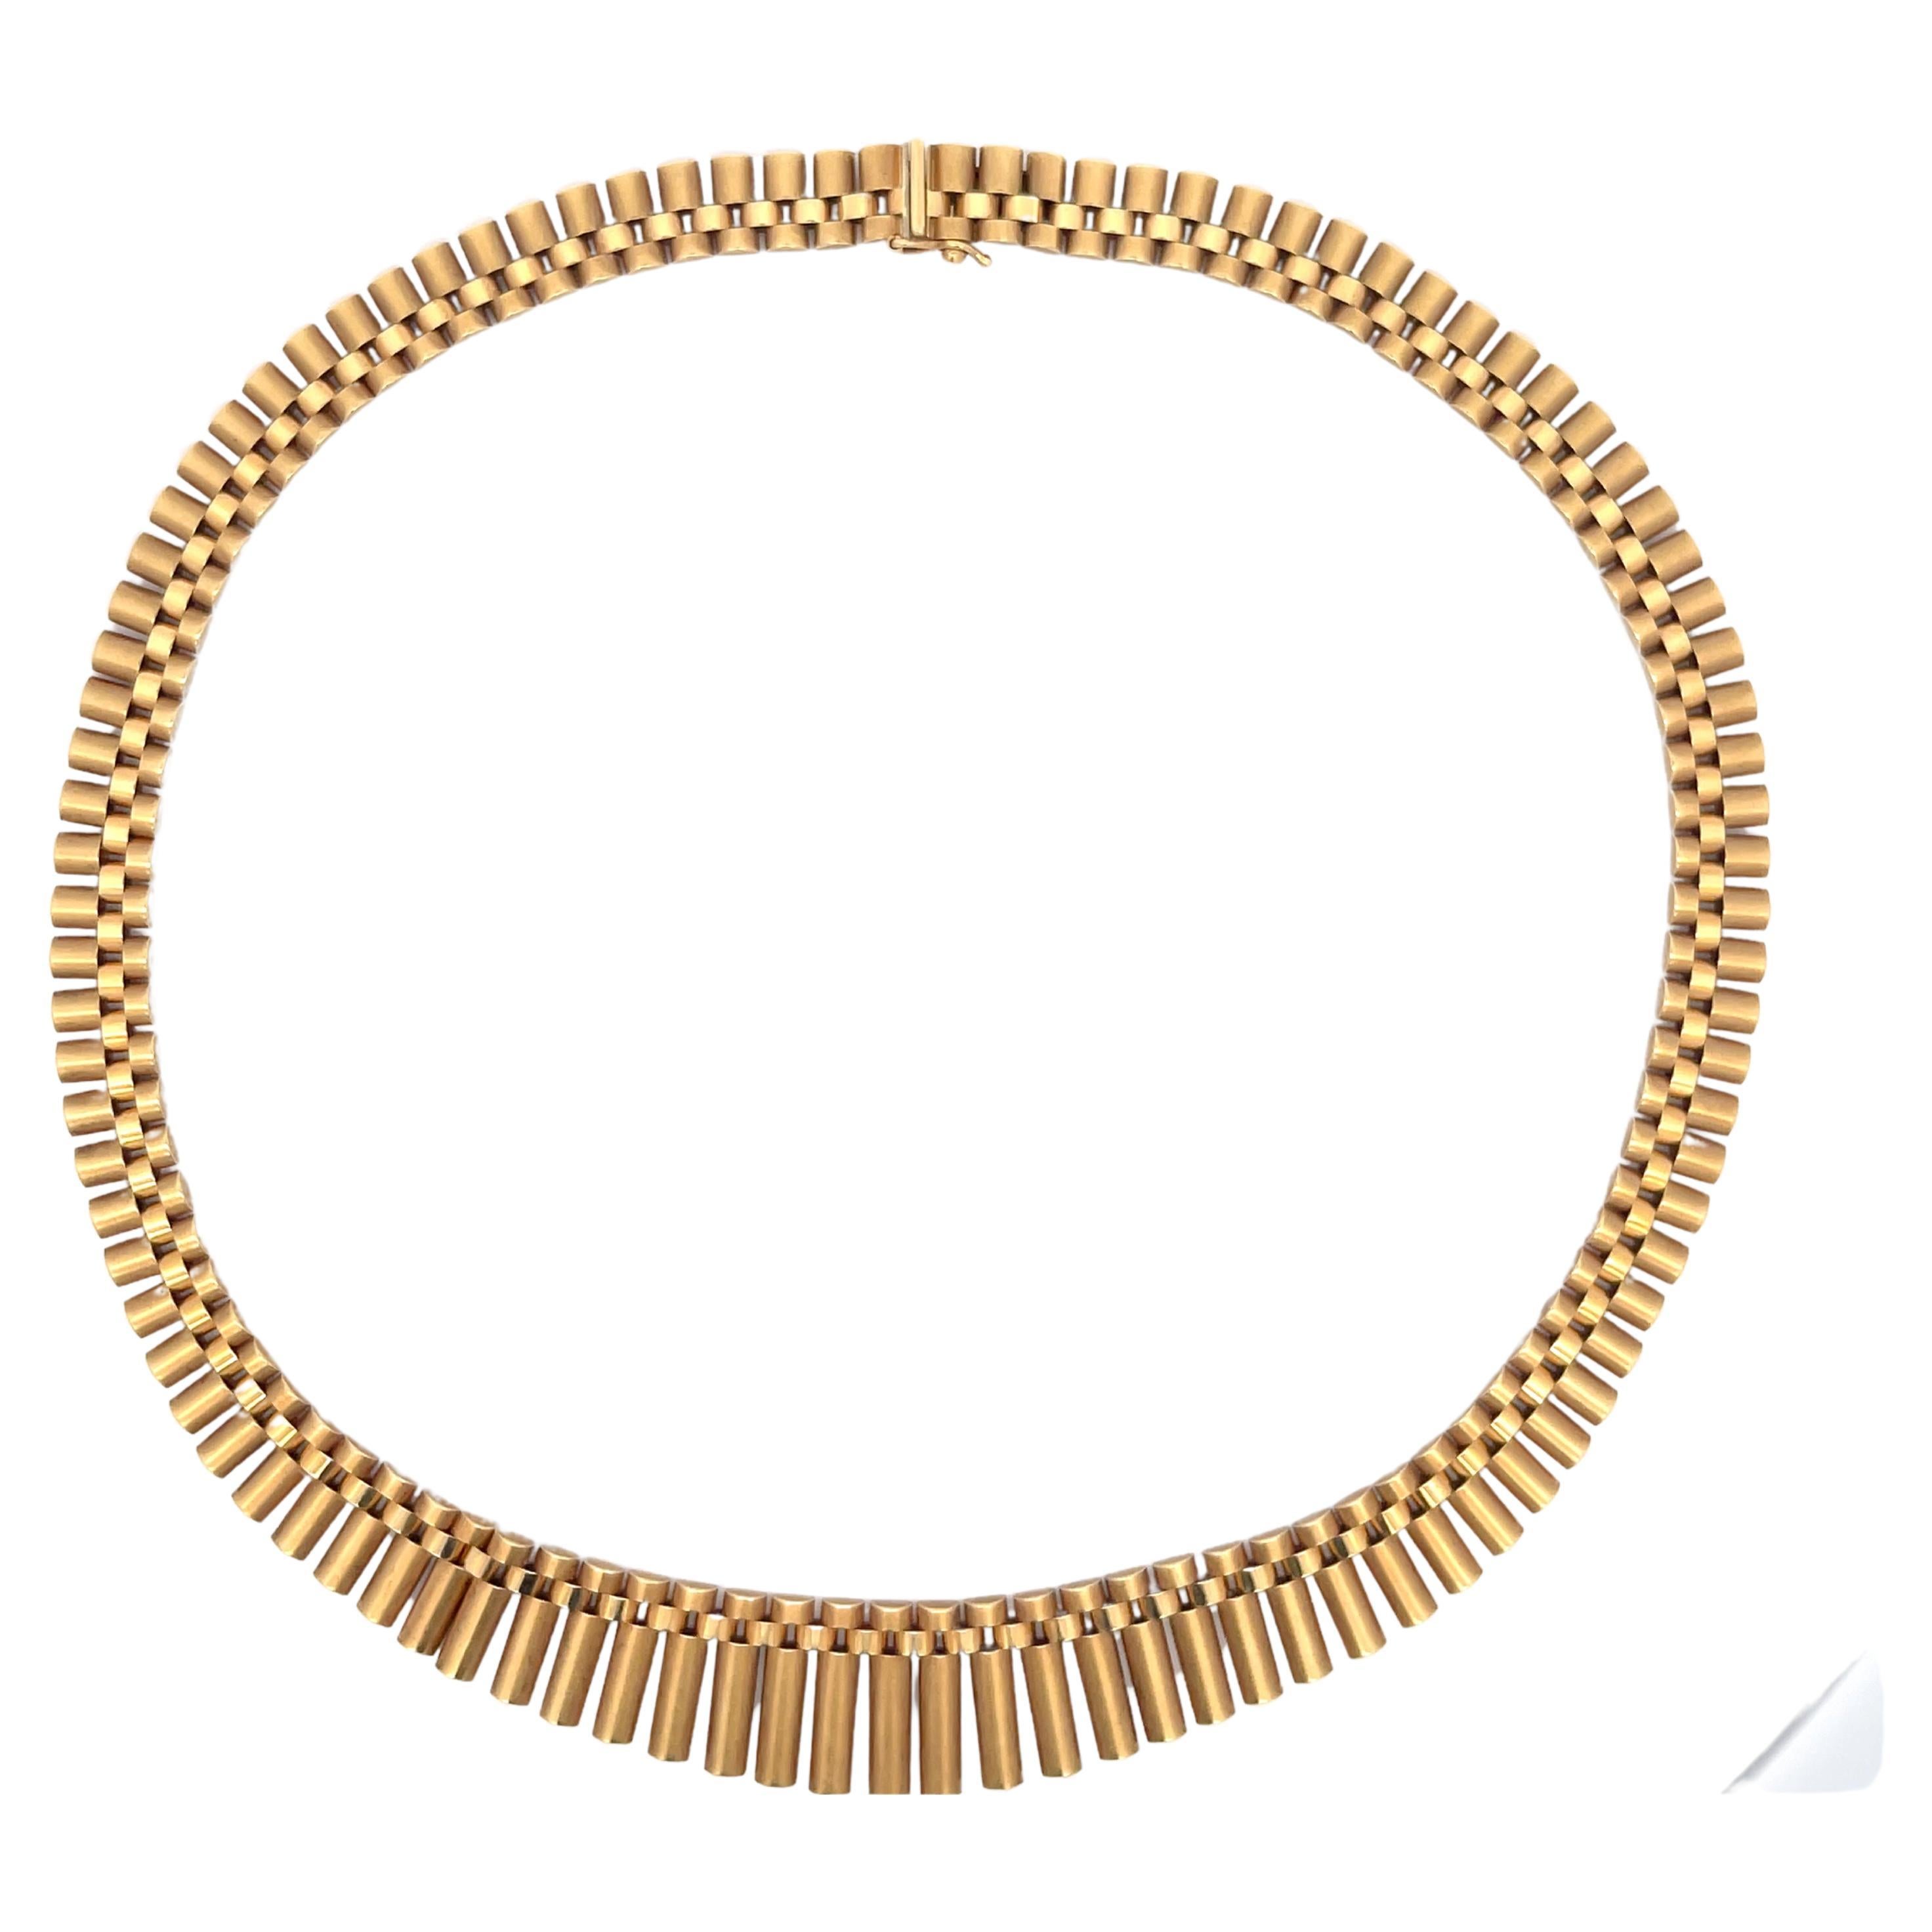 10k Gold Rolex Chain Link Necklace for Men Women | eBay